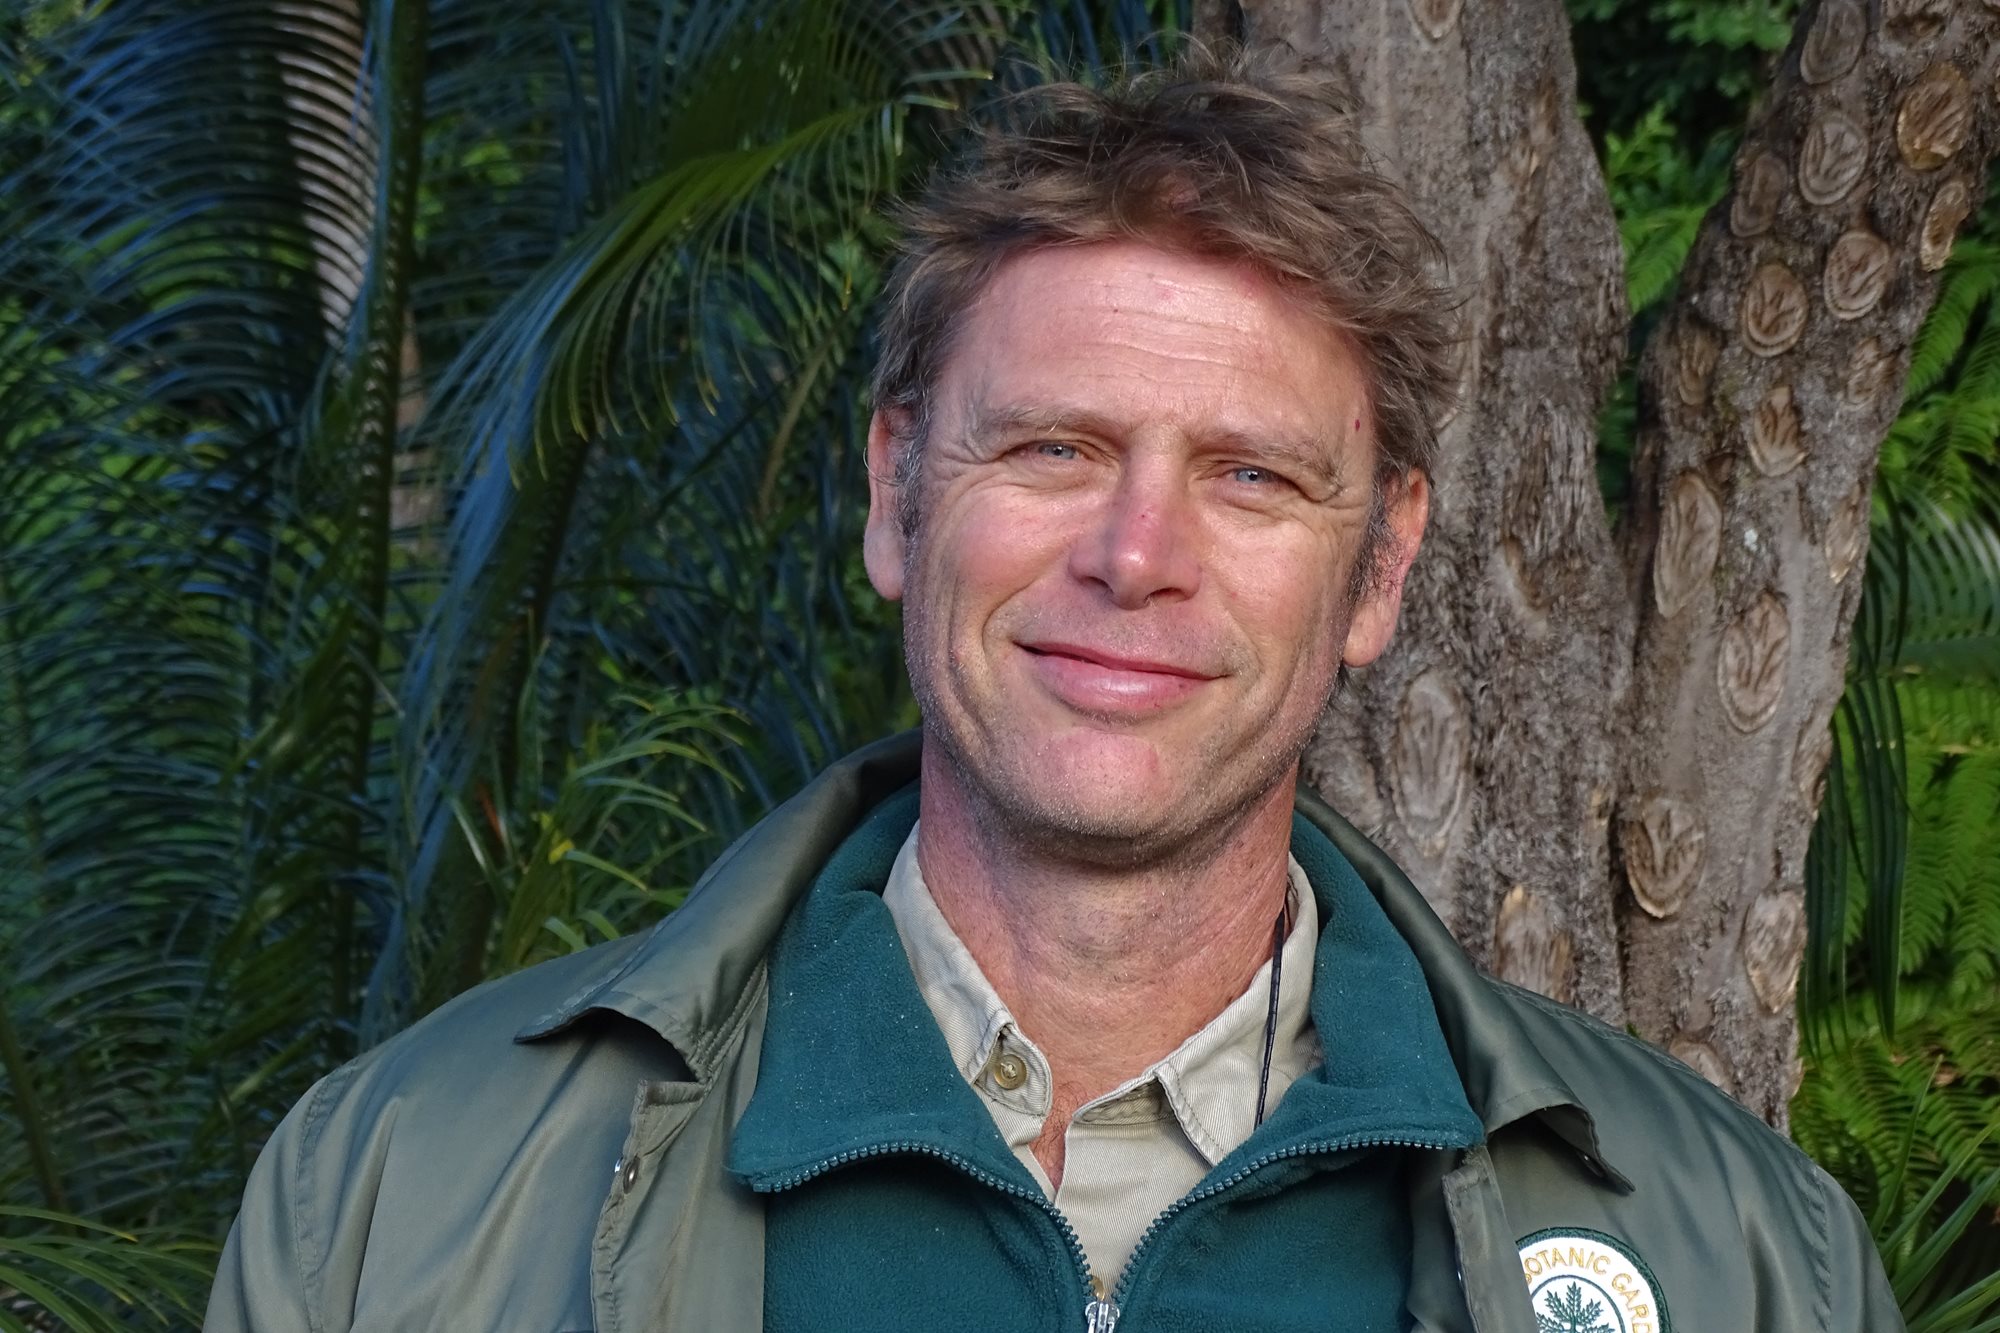 Grant Burrell Senior Horticulturalist